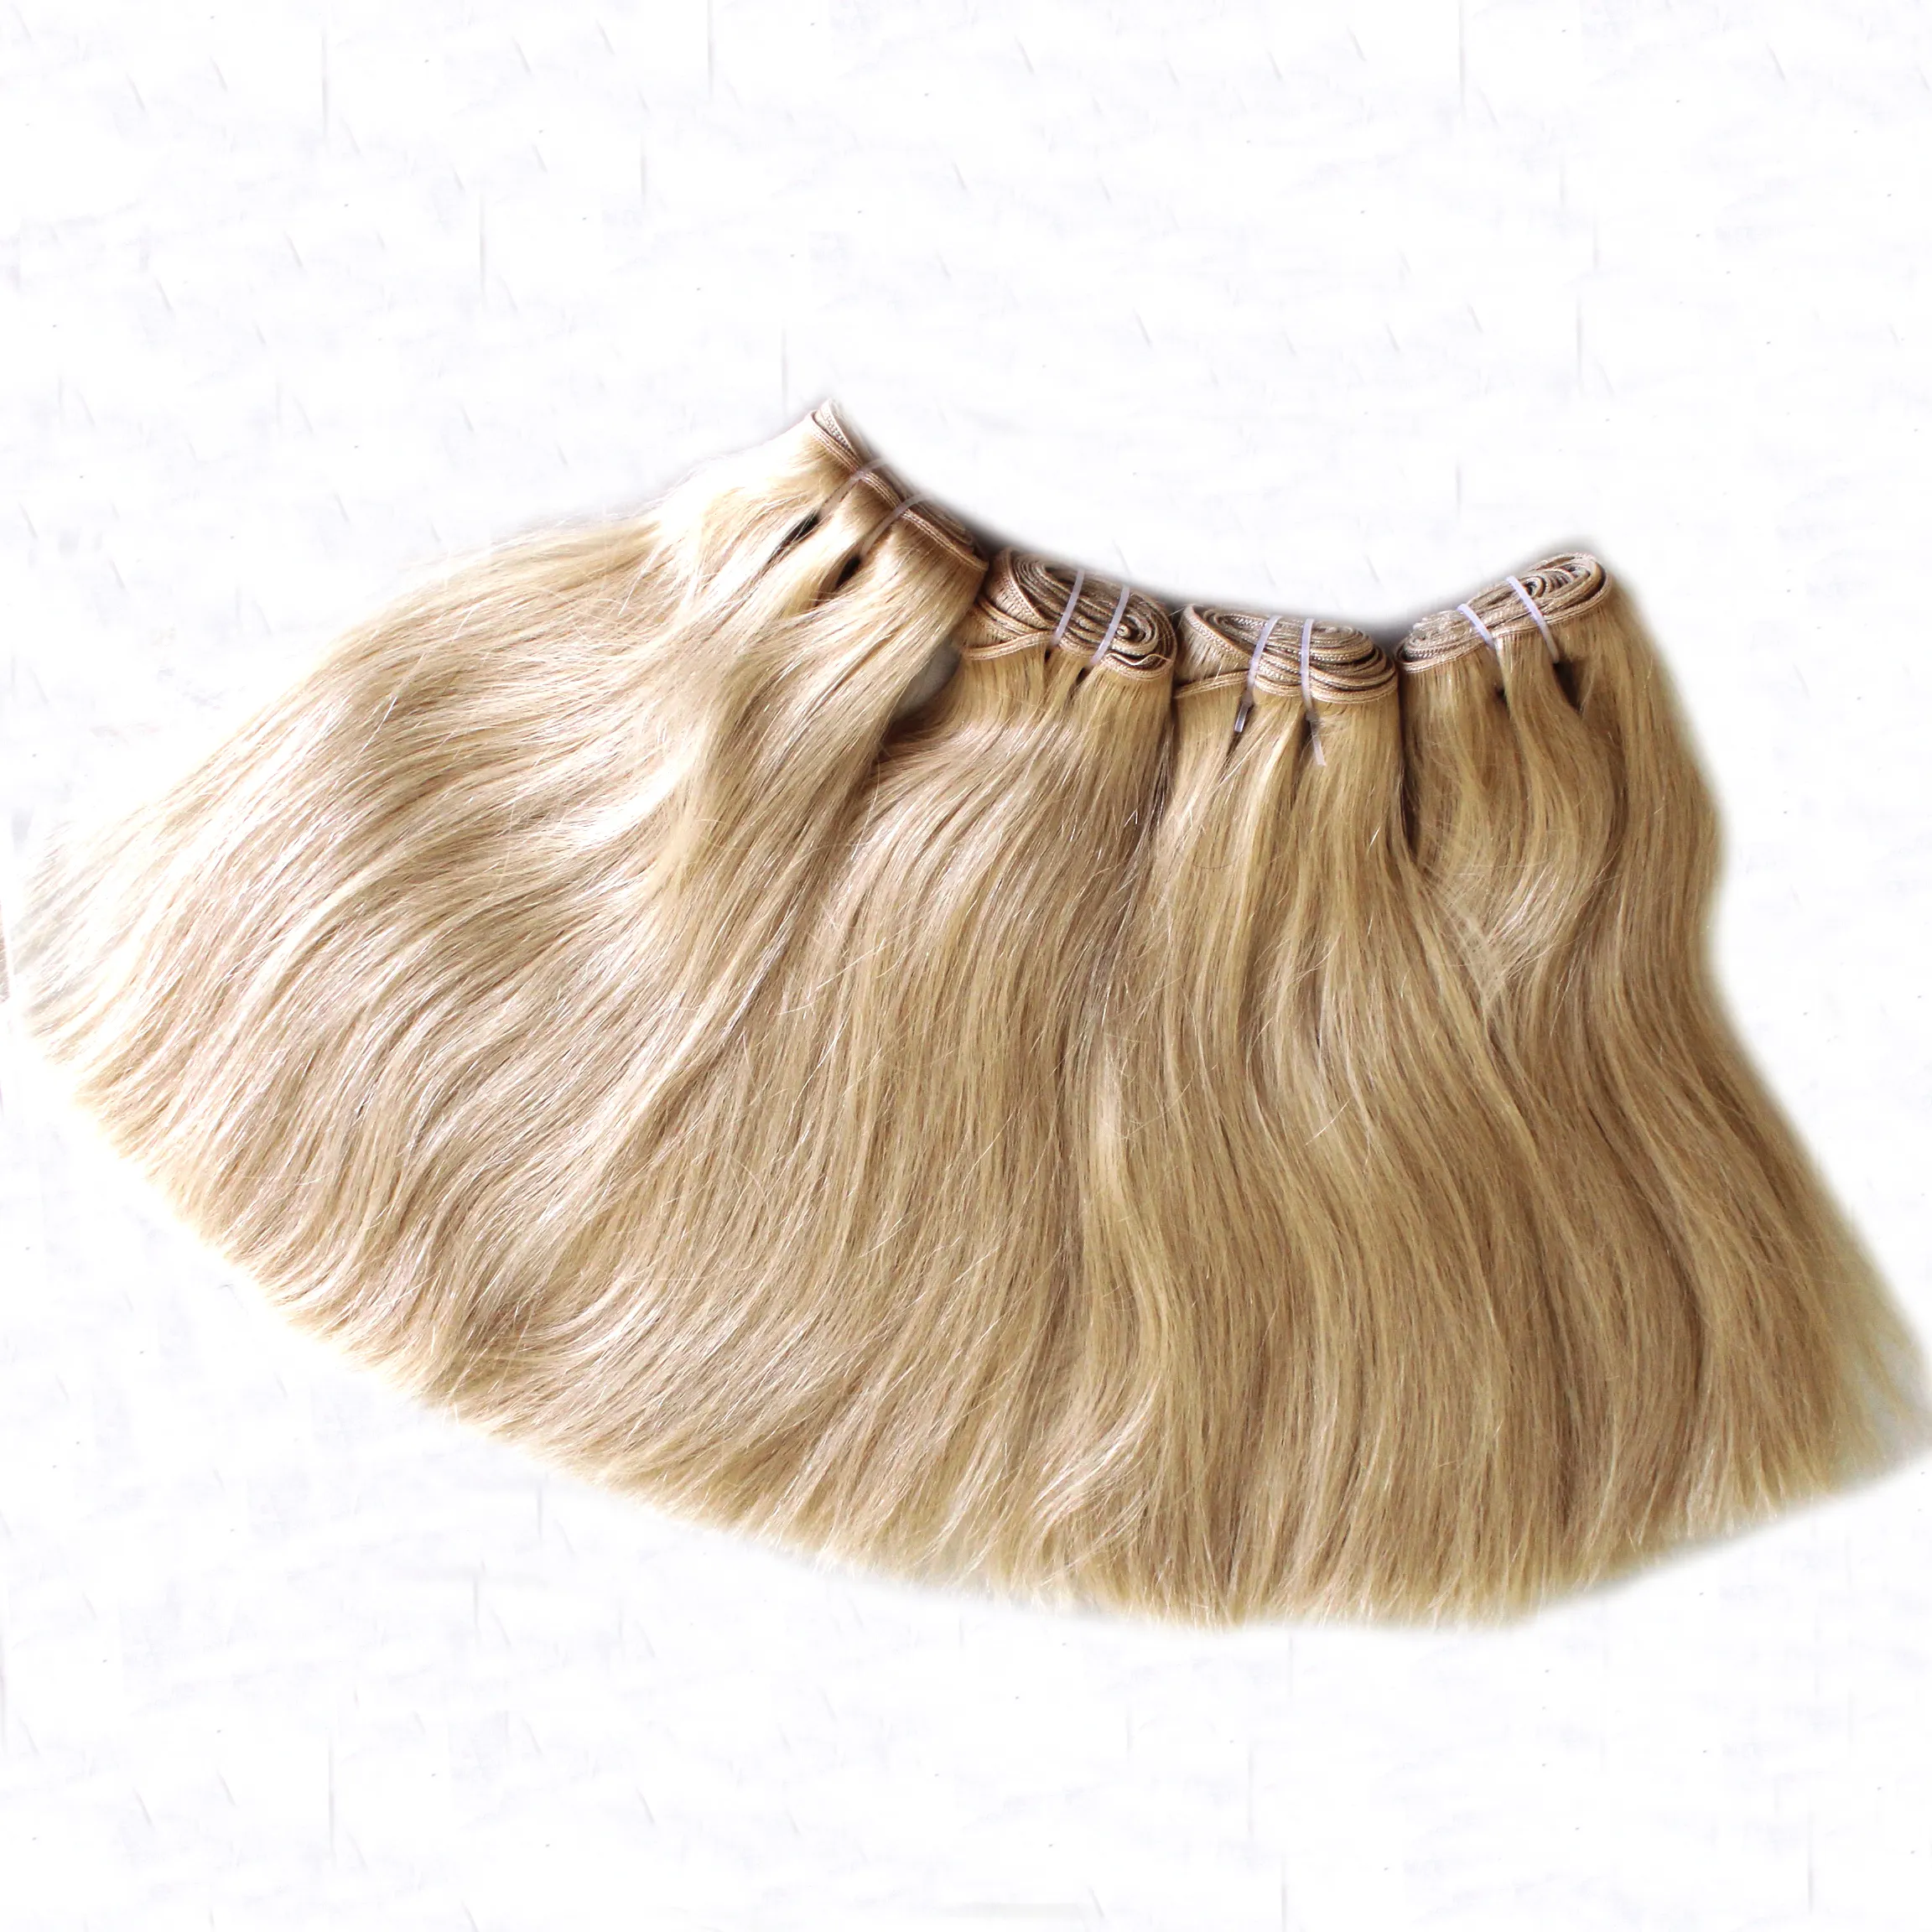 Soft hair extensions blonde Vietnamese Hair, Cheaper Vendor That Sold The Most Virgin Hair Extension Wavy Blonde Keratin Bond